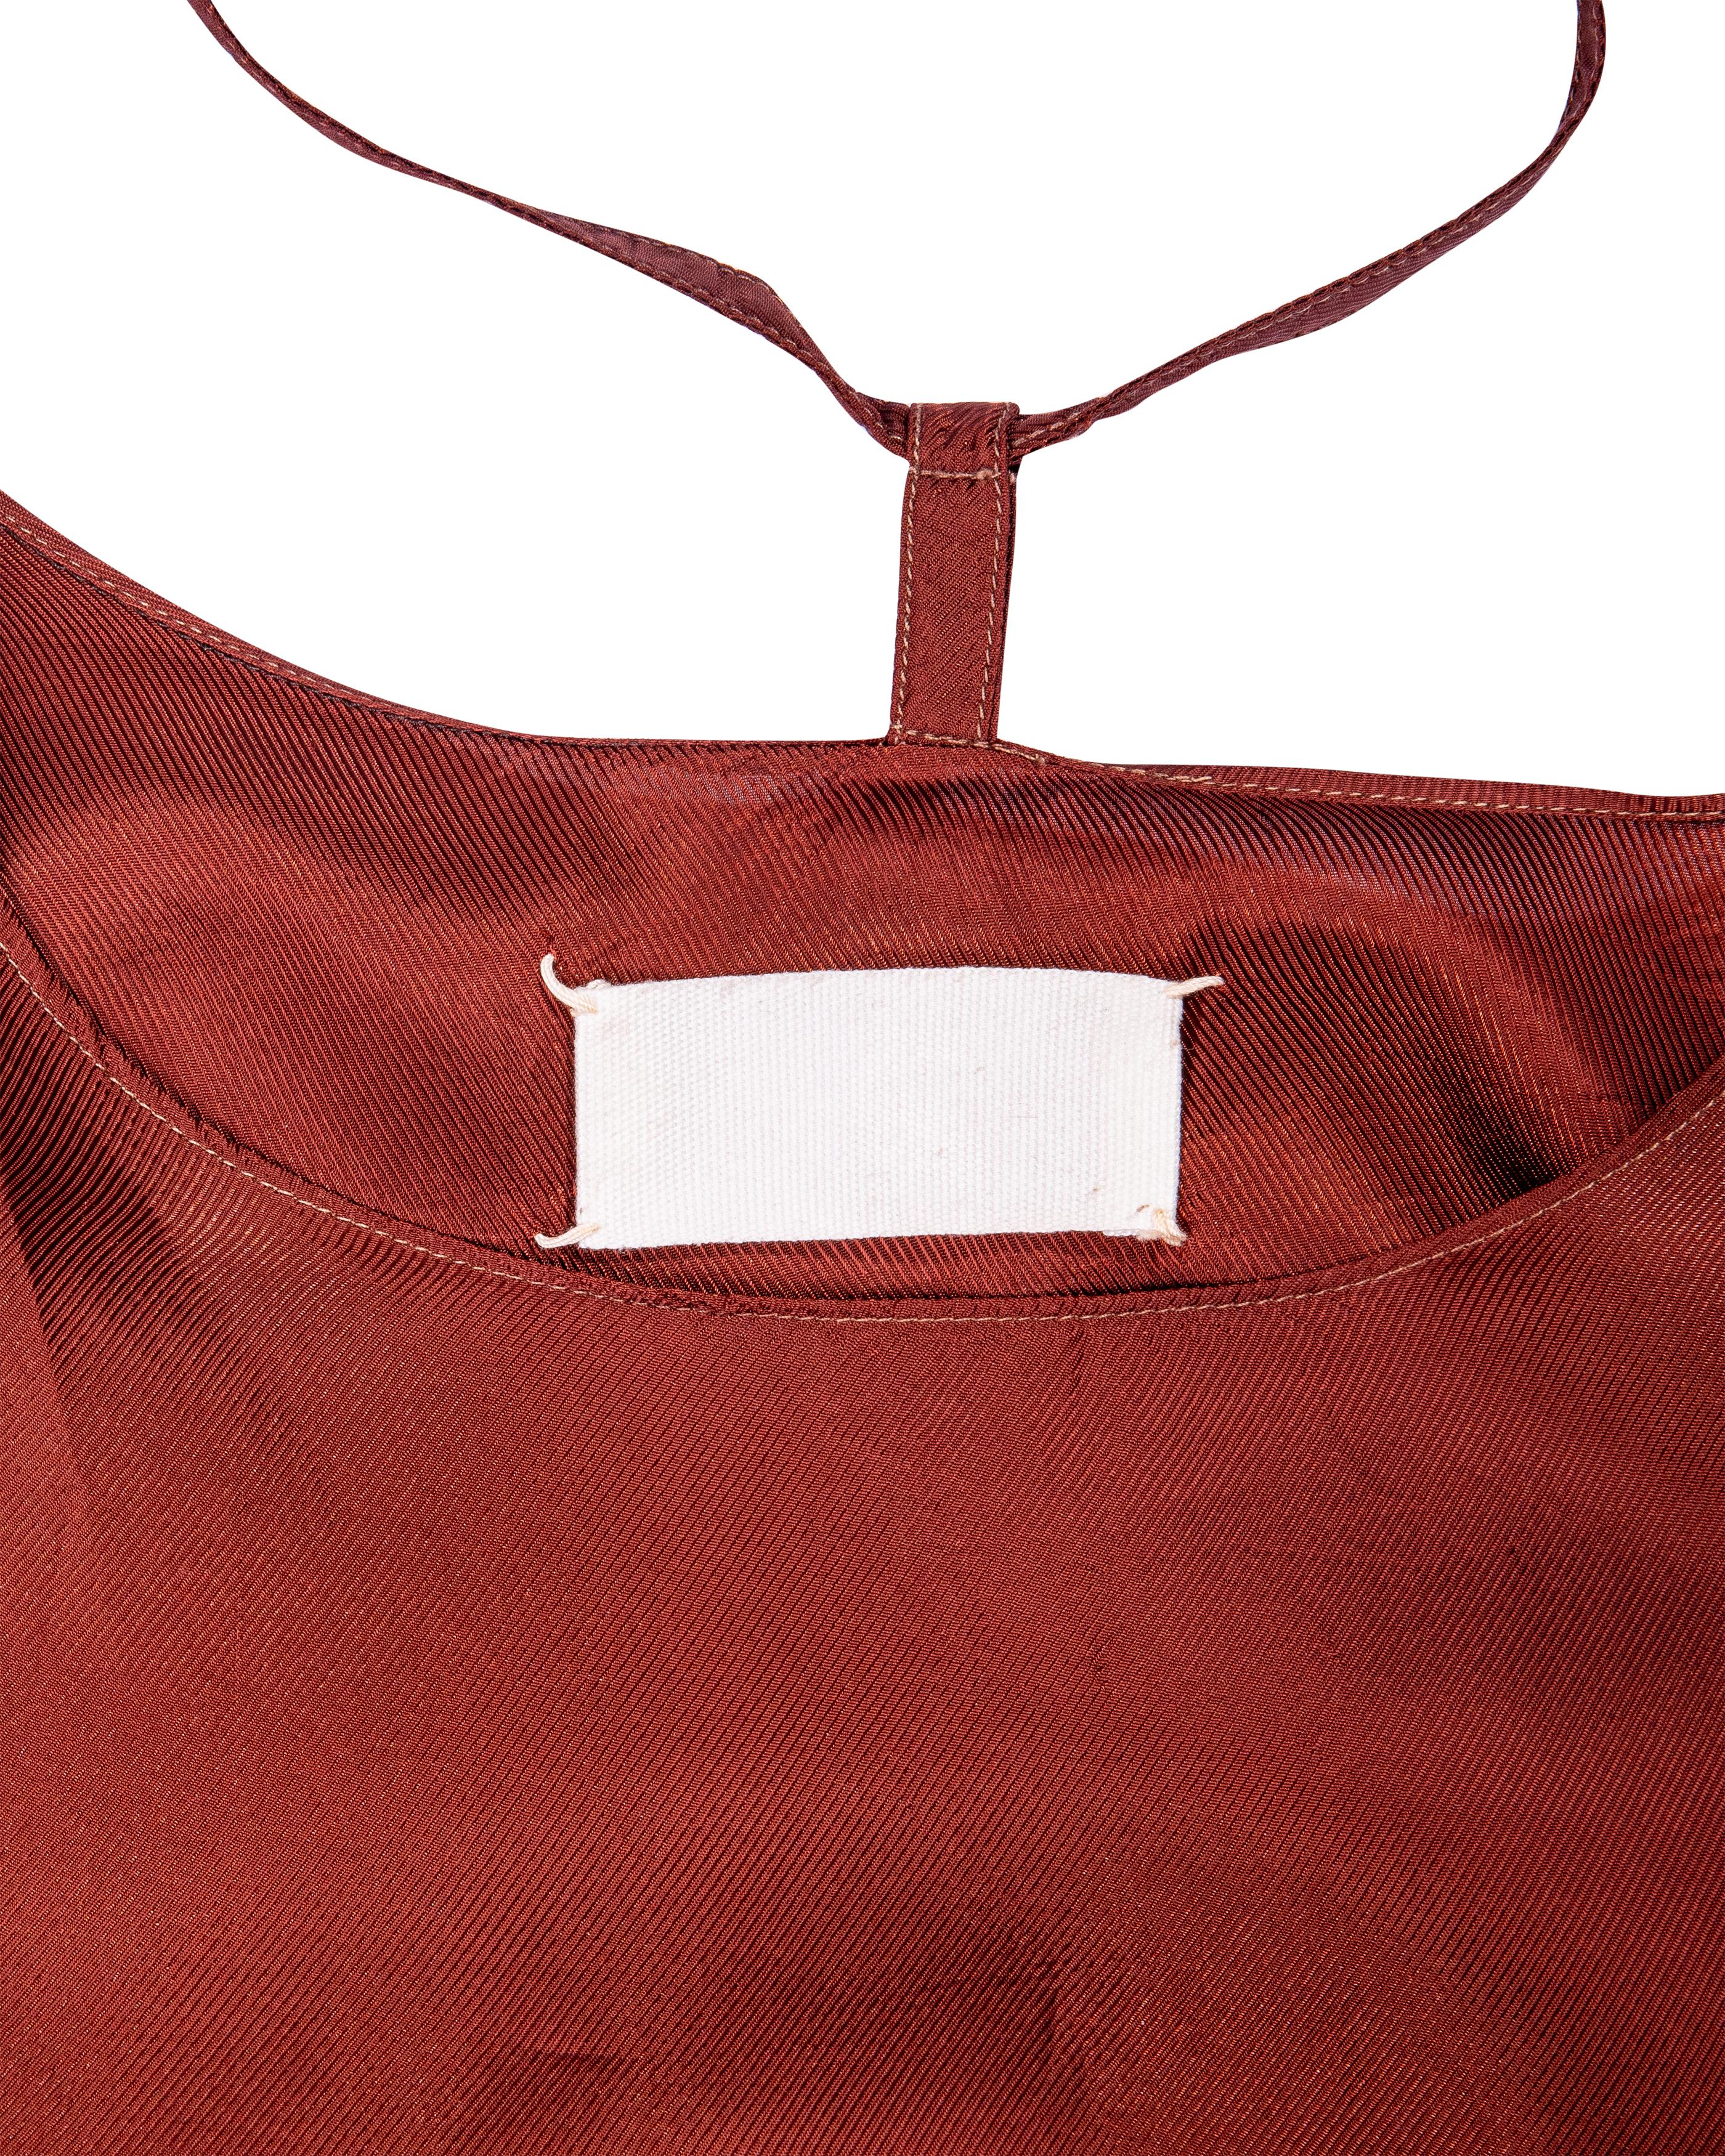 A/W 1999 Maison Martin Margiela Deep Rust Color-way 'Lining' Long Sleeve Dress For Sale 3